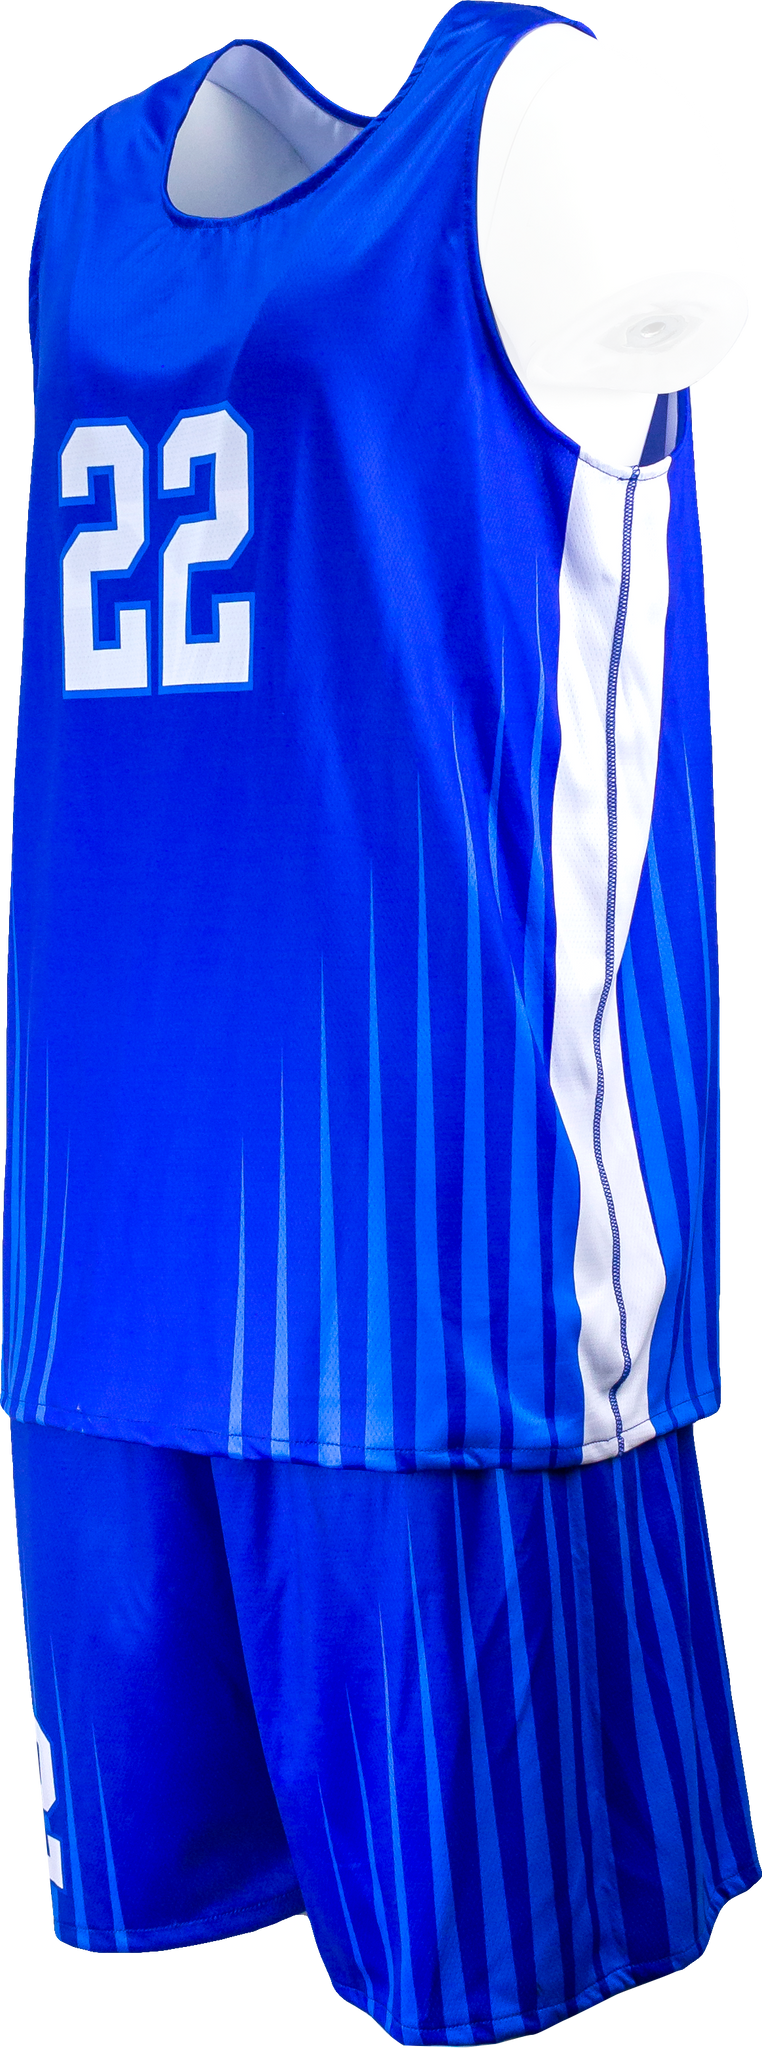 FitUSA Fade Sublimated Men's Basketball Jersey – FitUSA Manufacturing